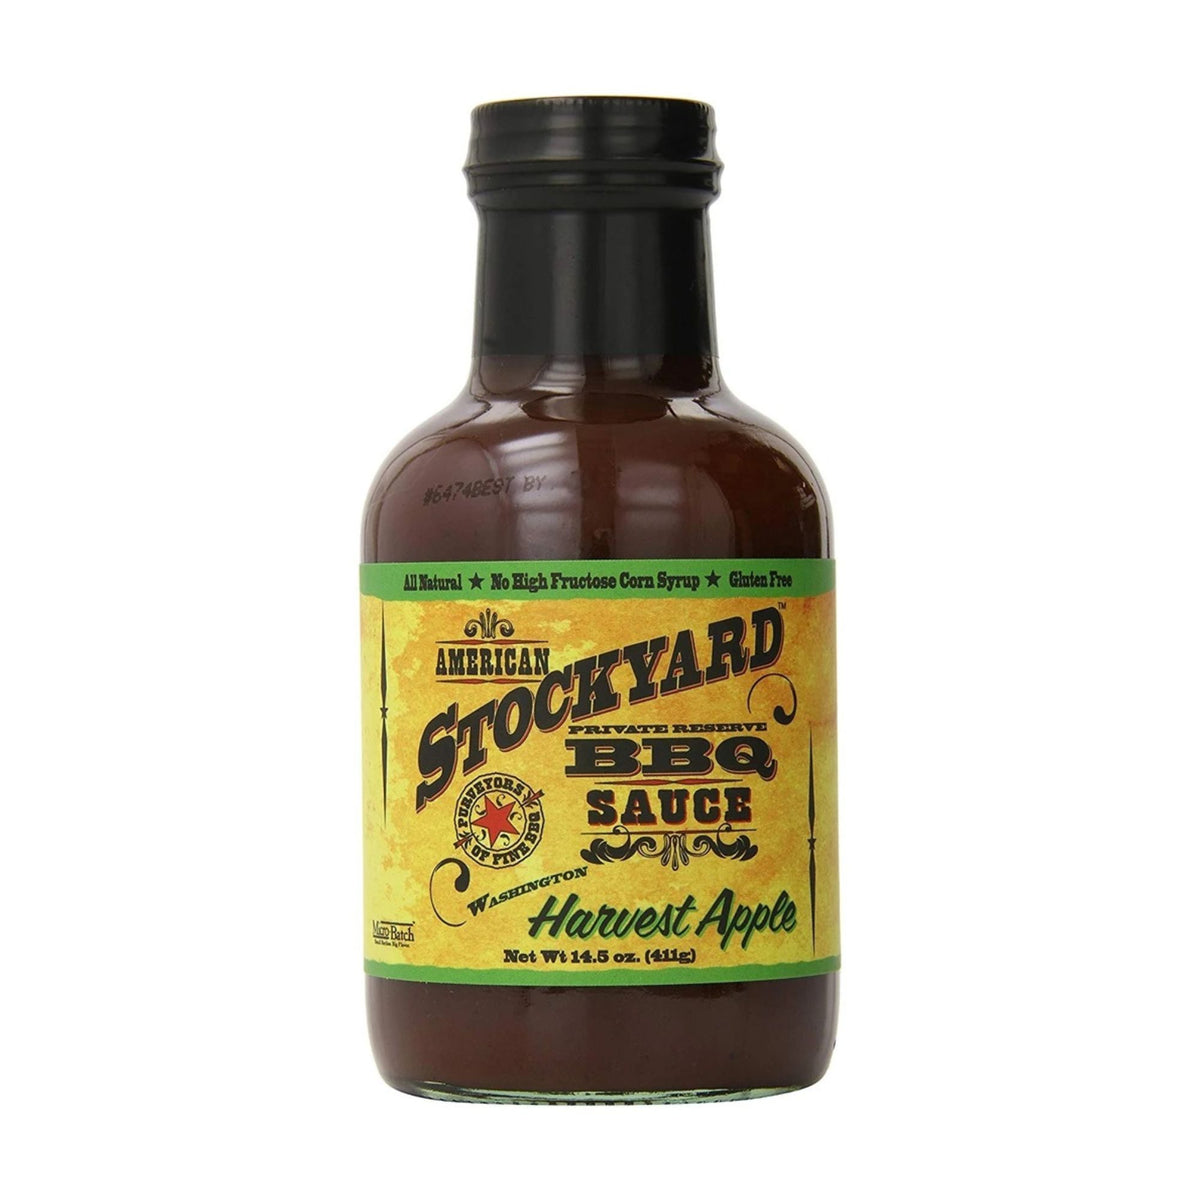 American Stockyard BBQ Sauce Harvest Apple - Alza il livello!